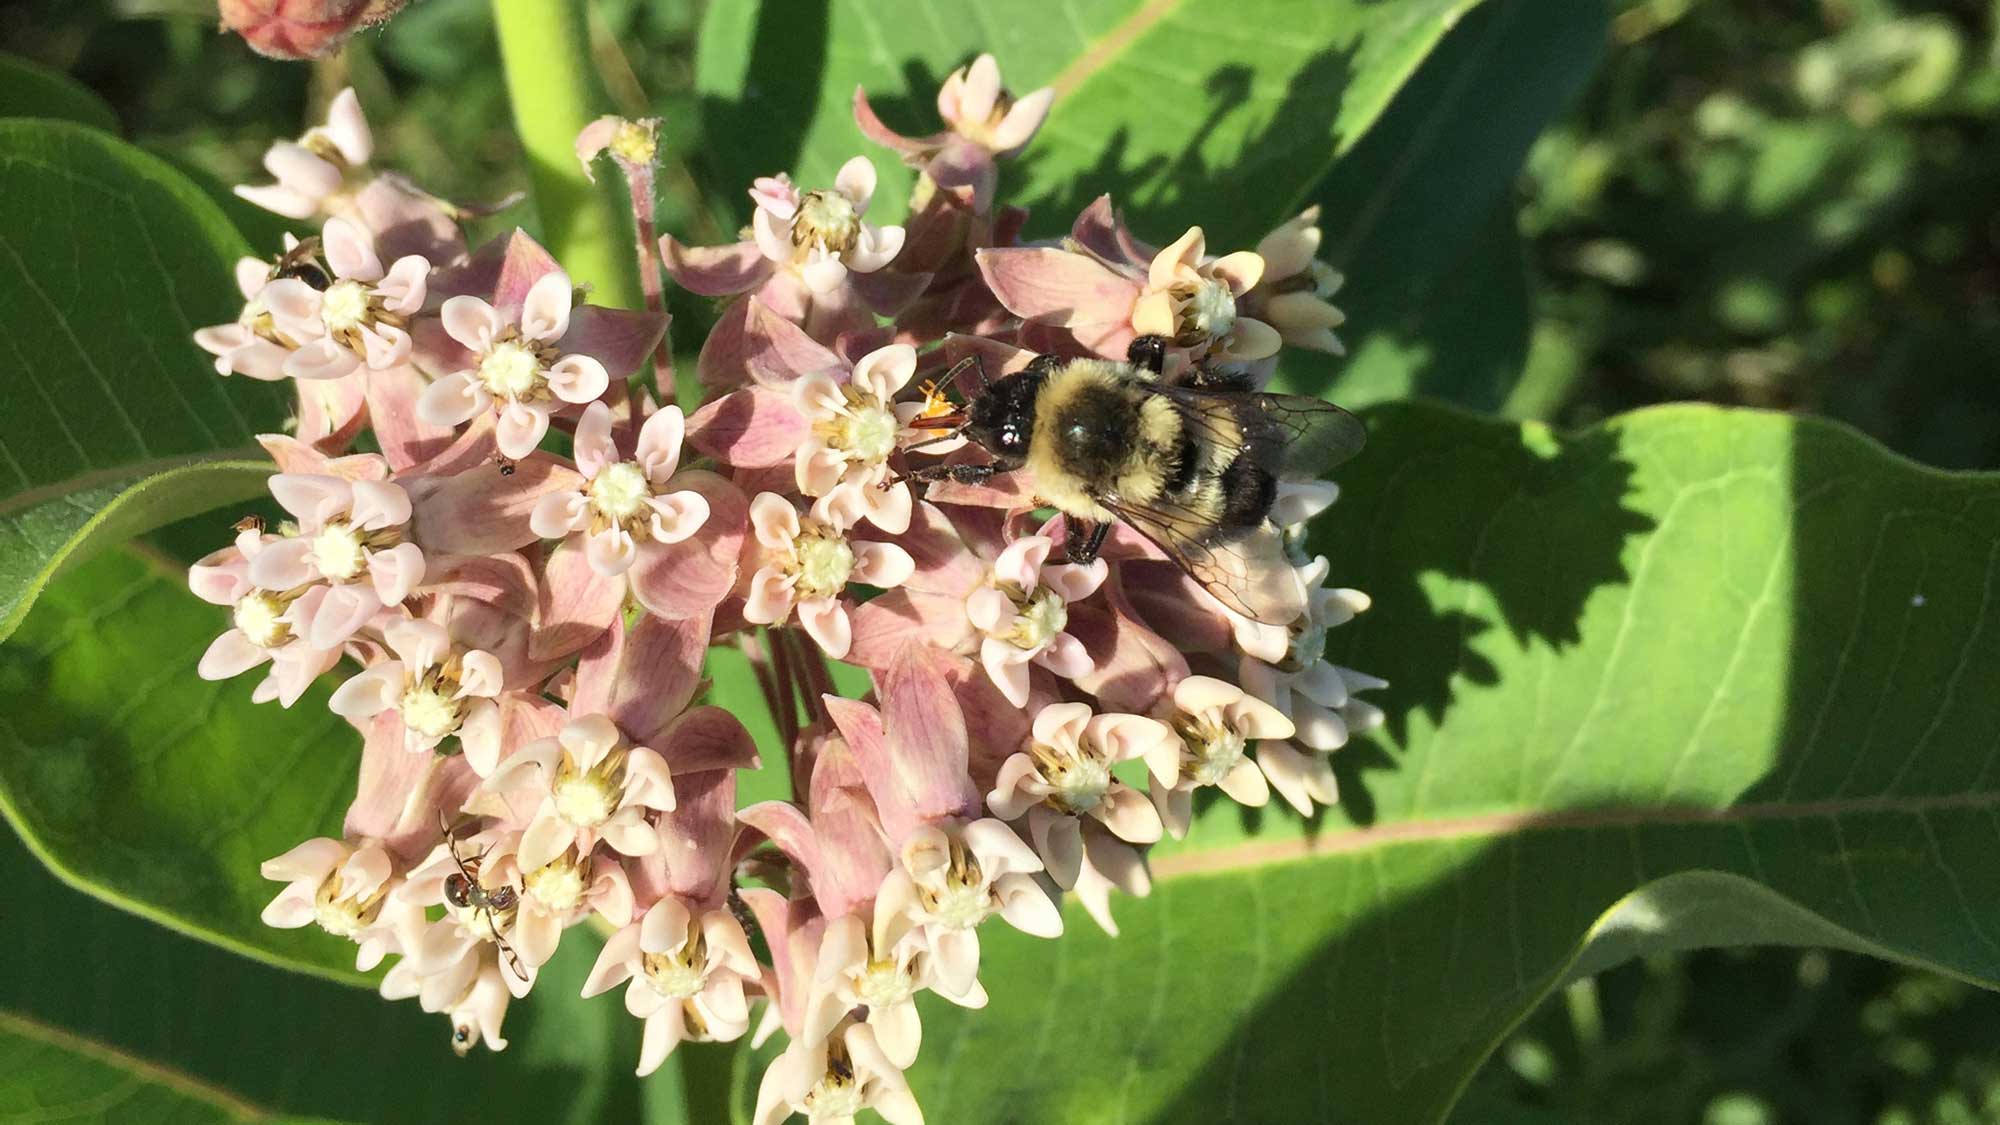 Photograph of a honeybee on a milkweed flower.